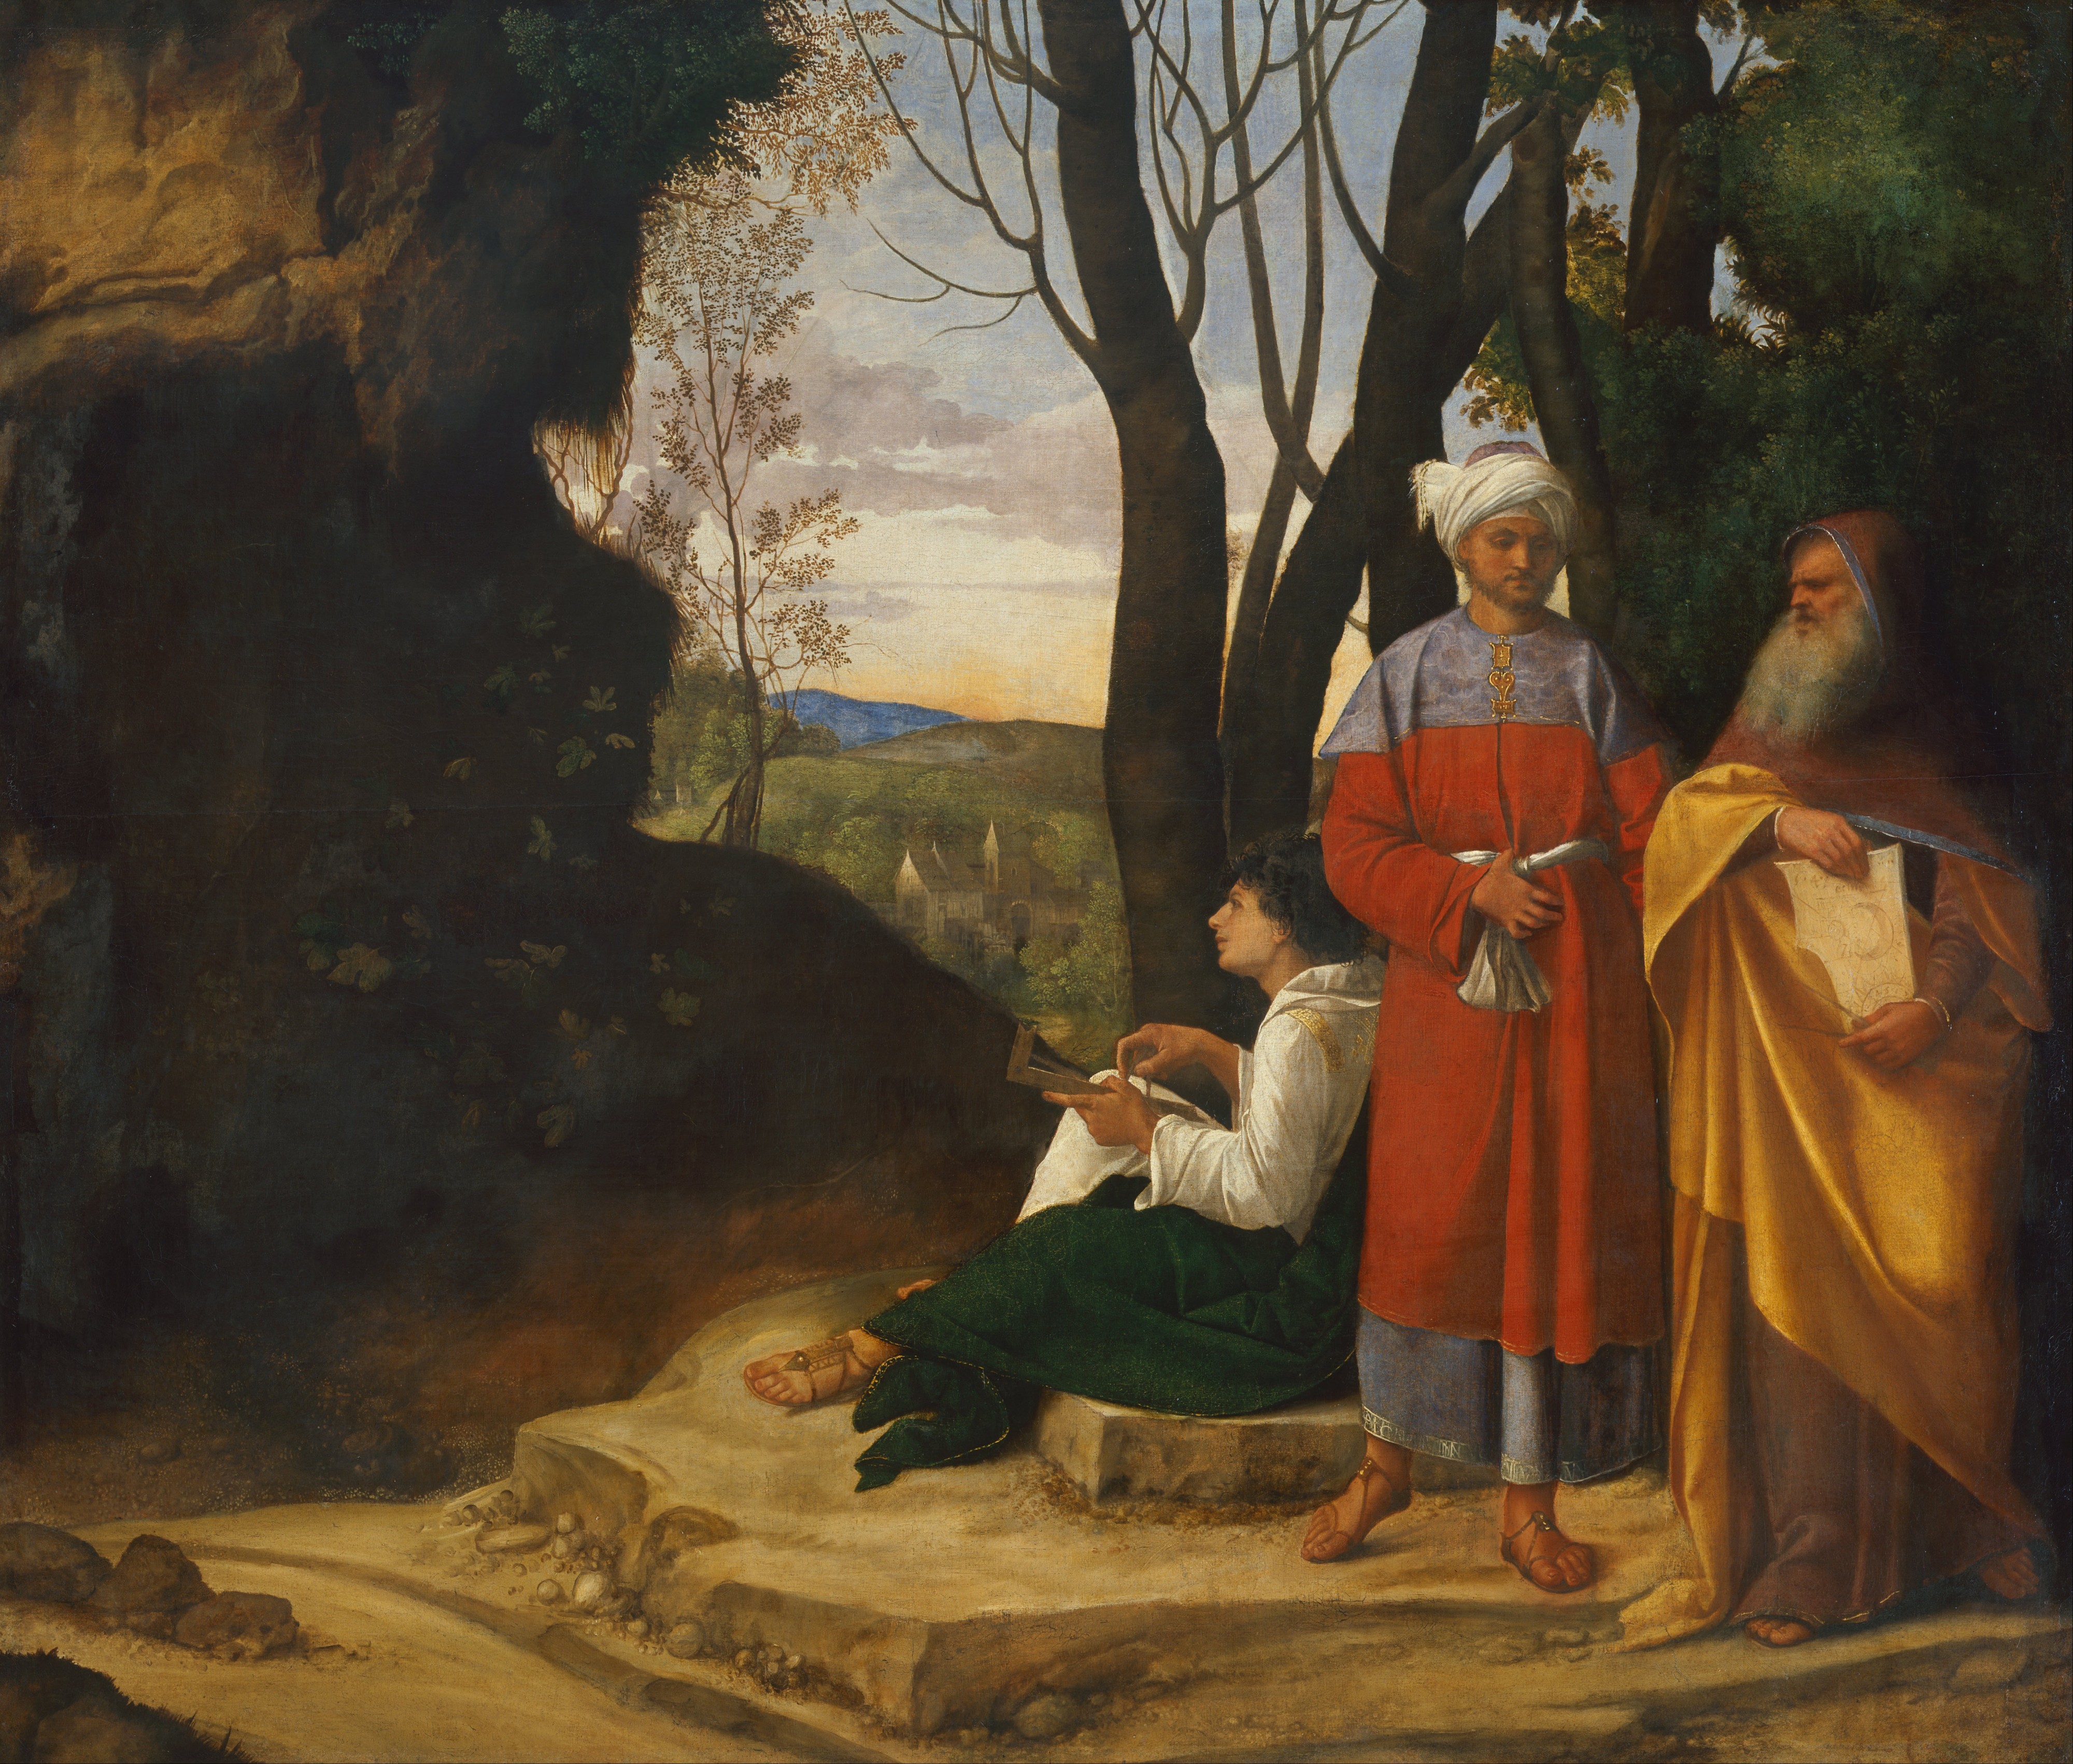 Giorgione - Three Philosophers - Google Art Project